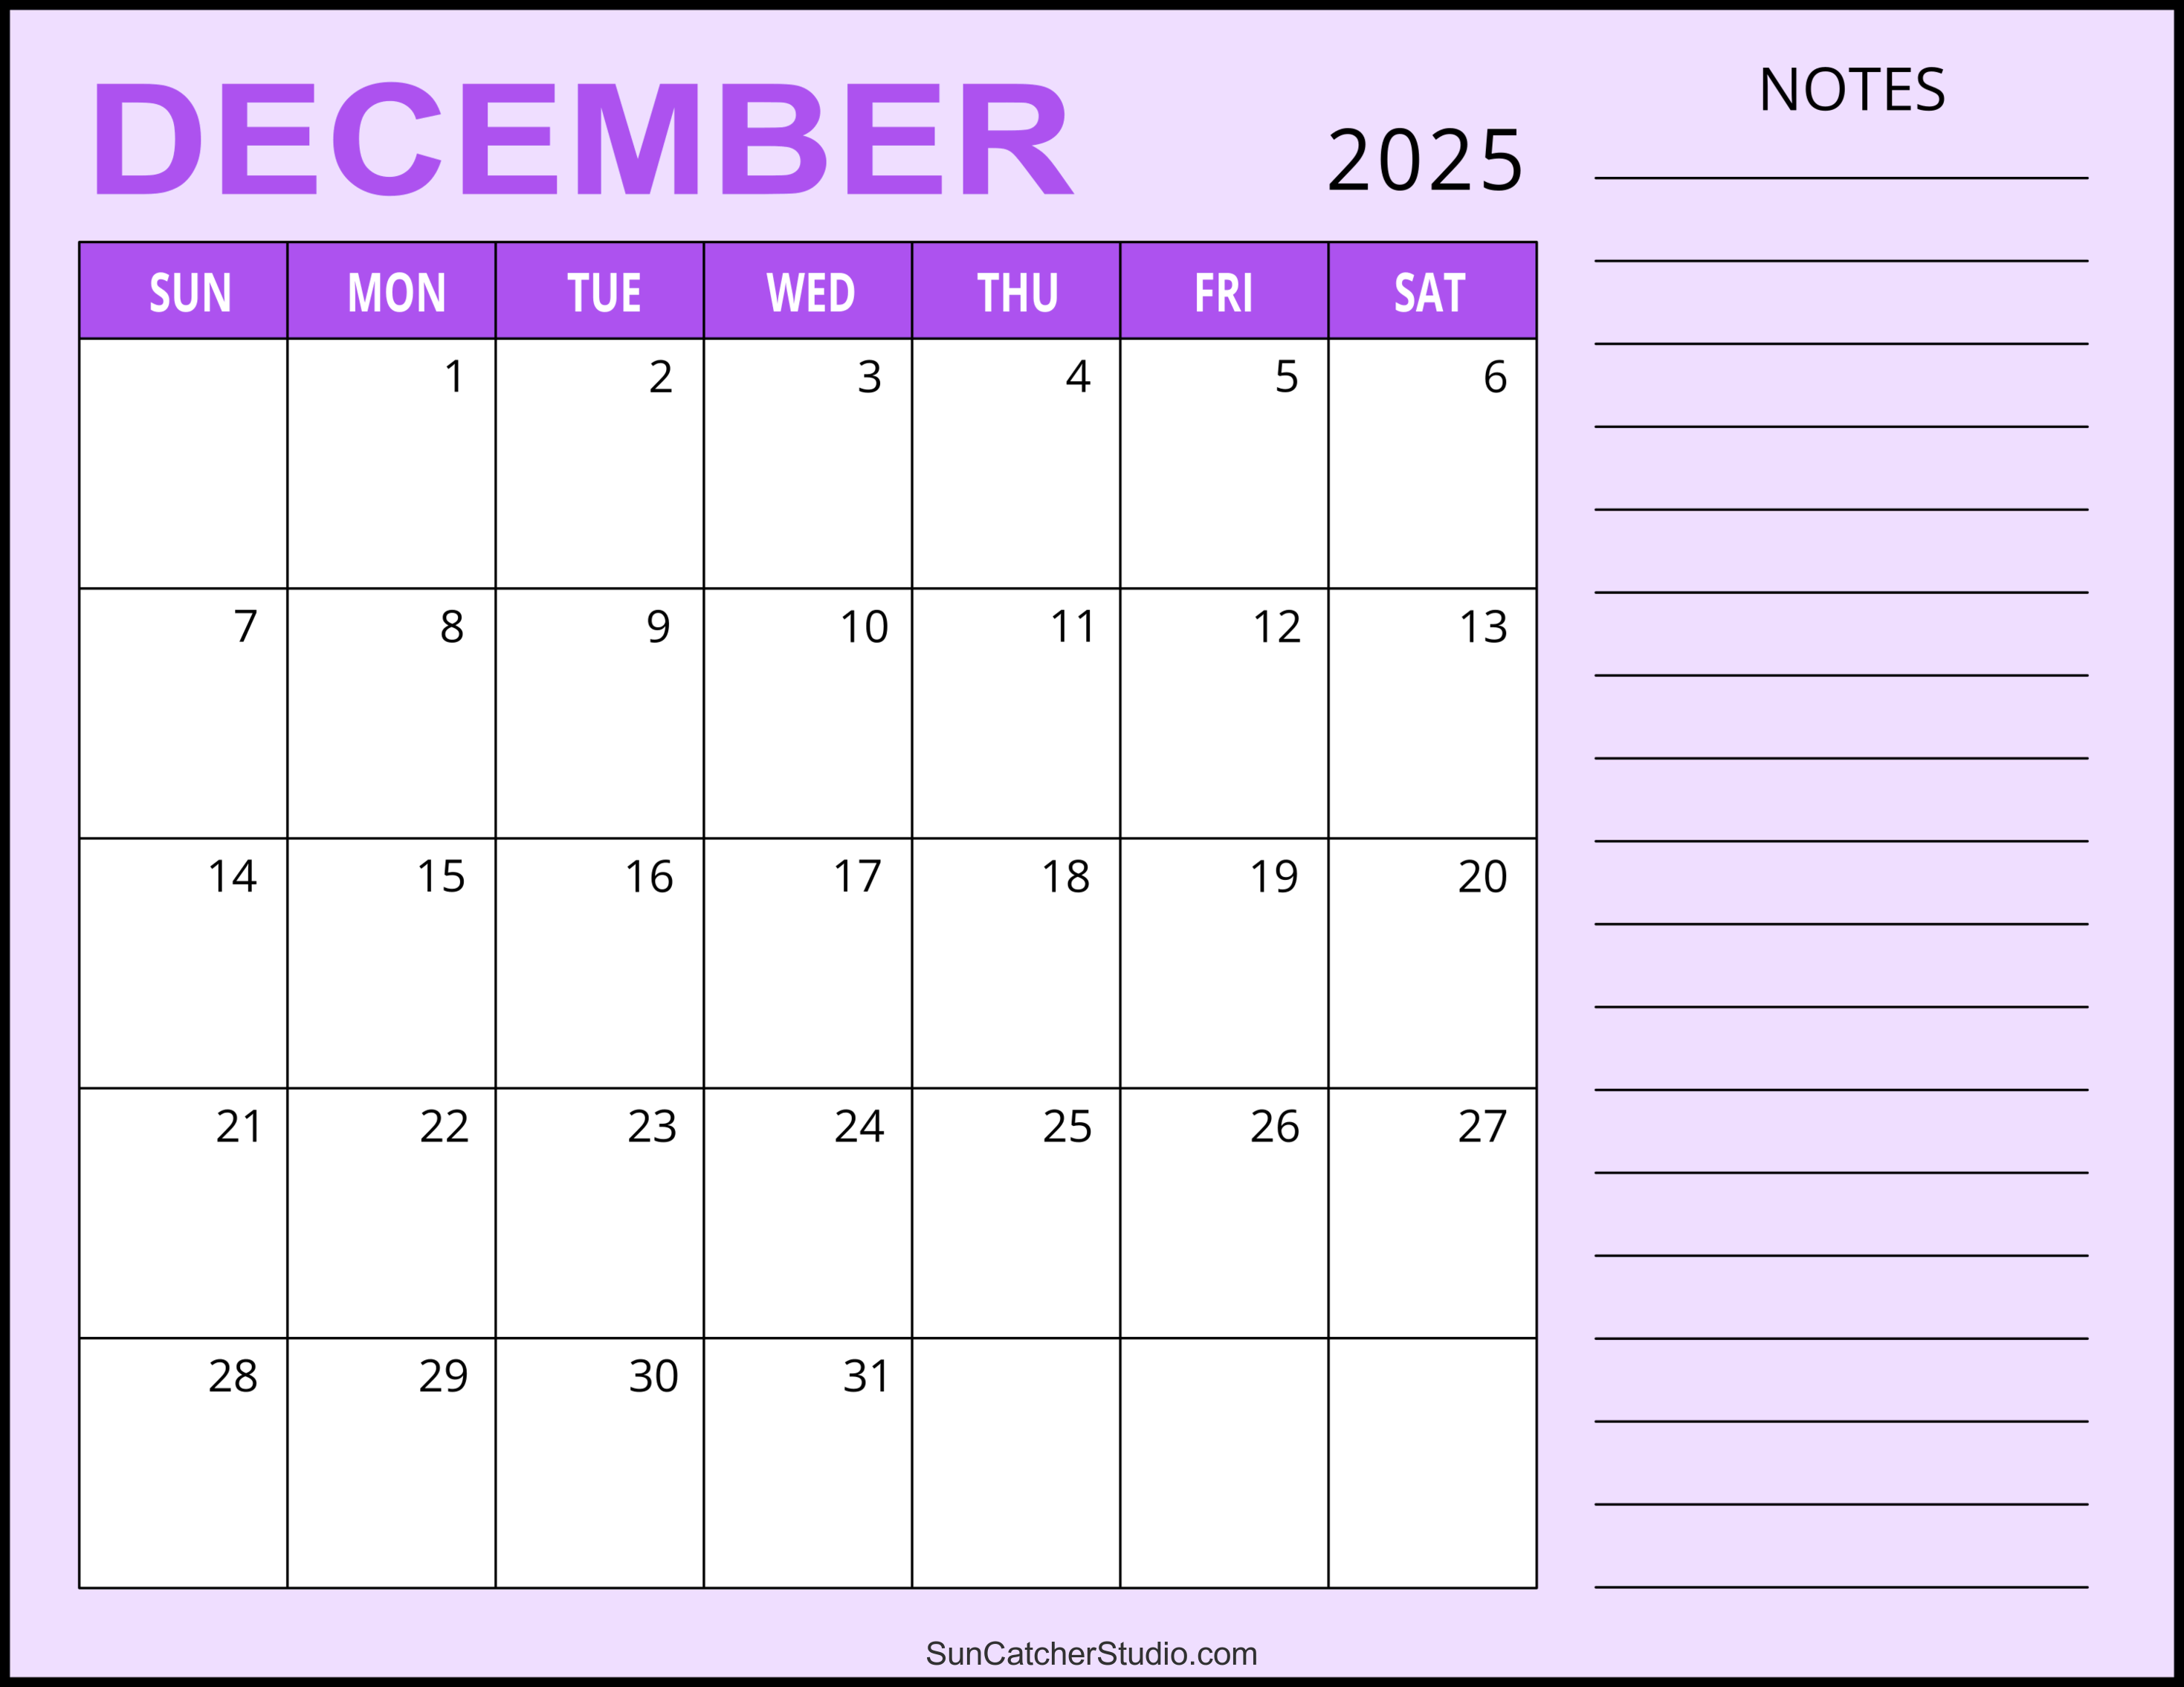 December 2025 Calendar (Free Printable) – DIY Projects, Patterns, Monograms, Designs, Templates